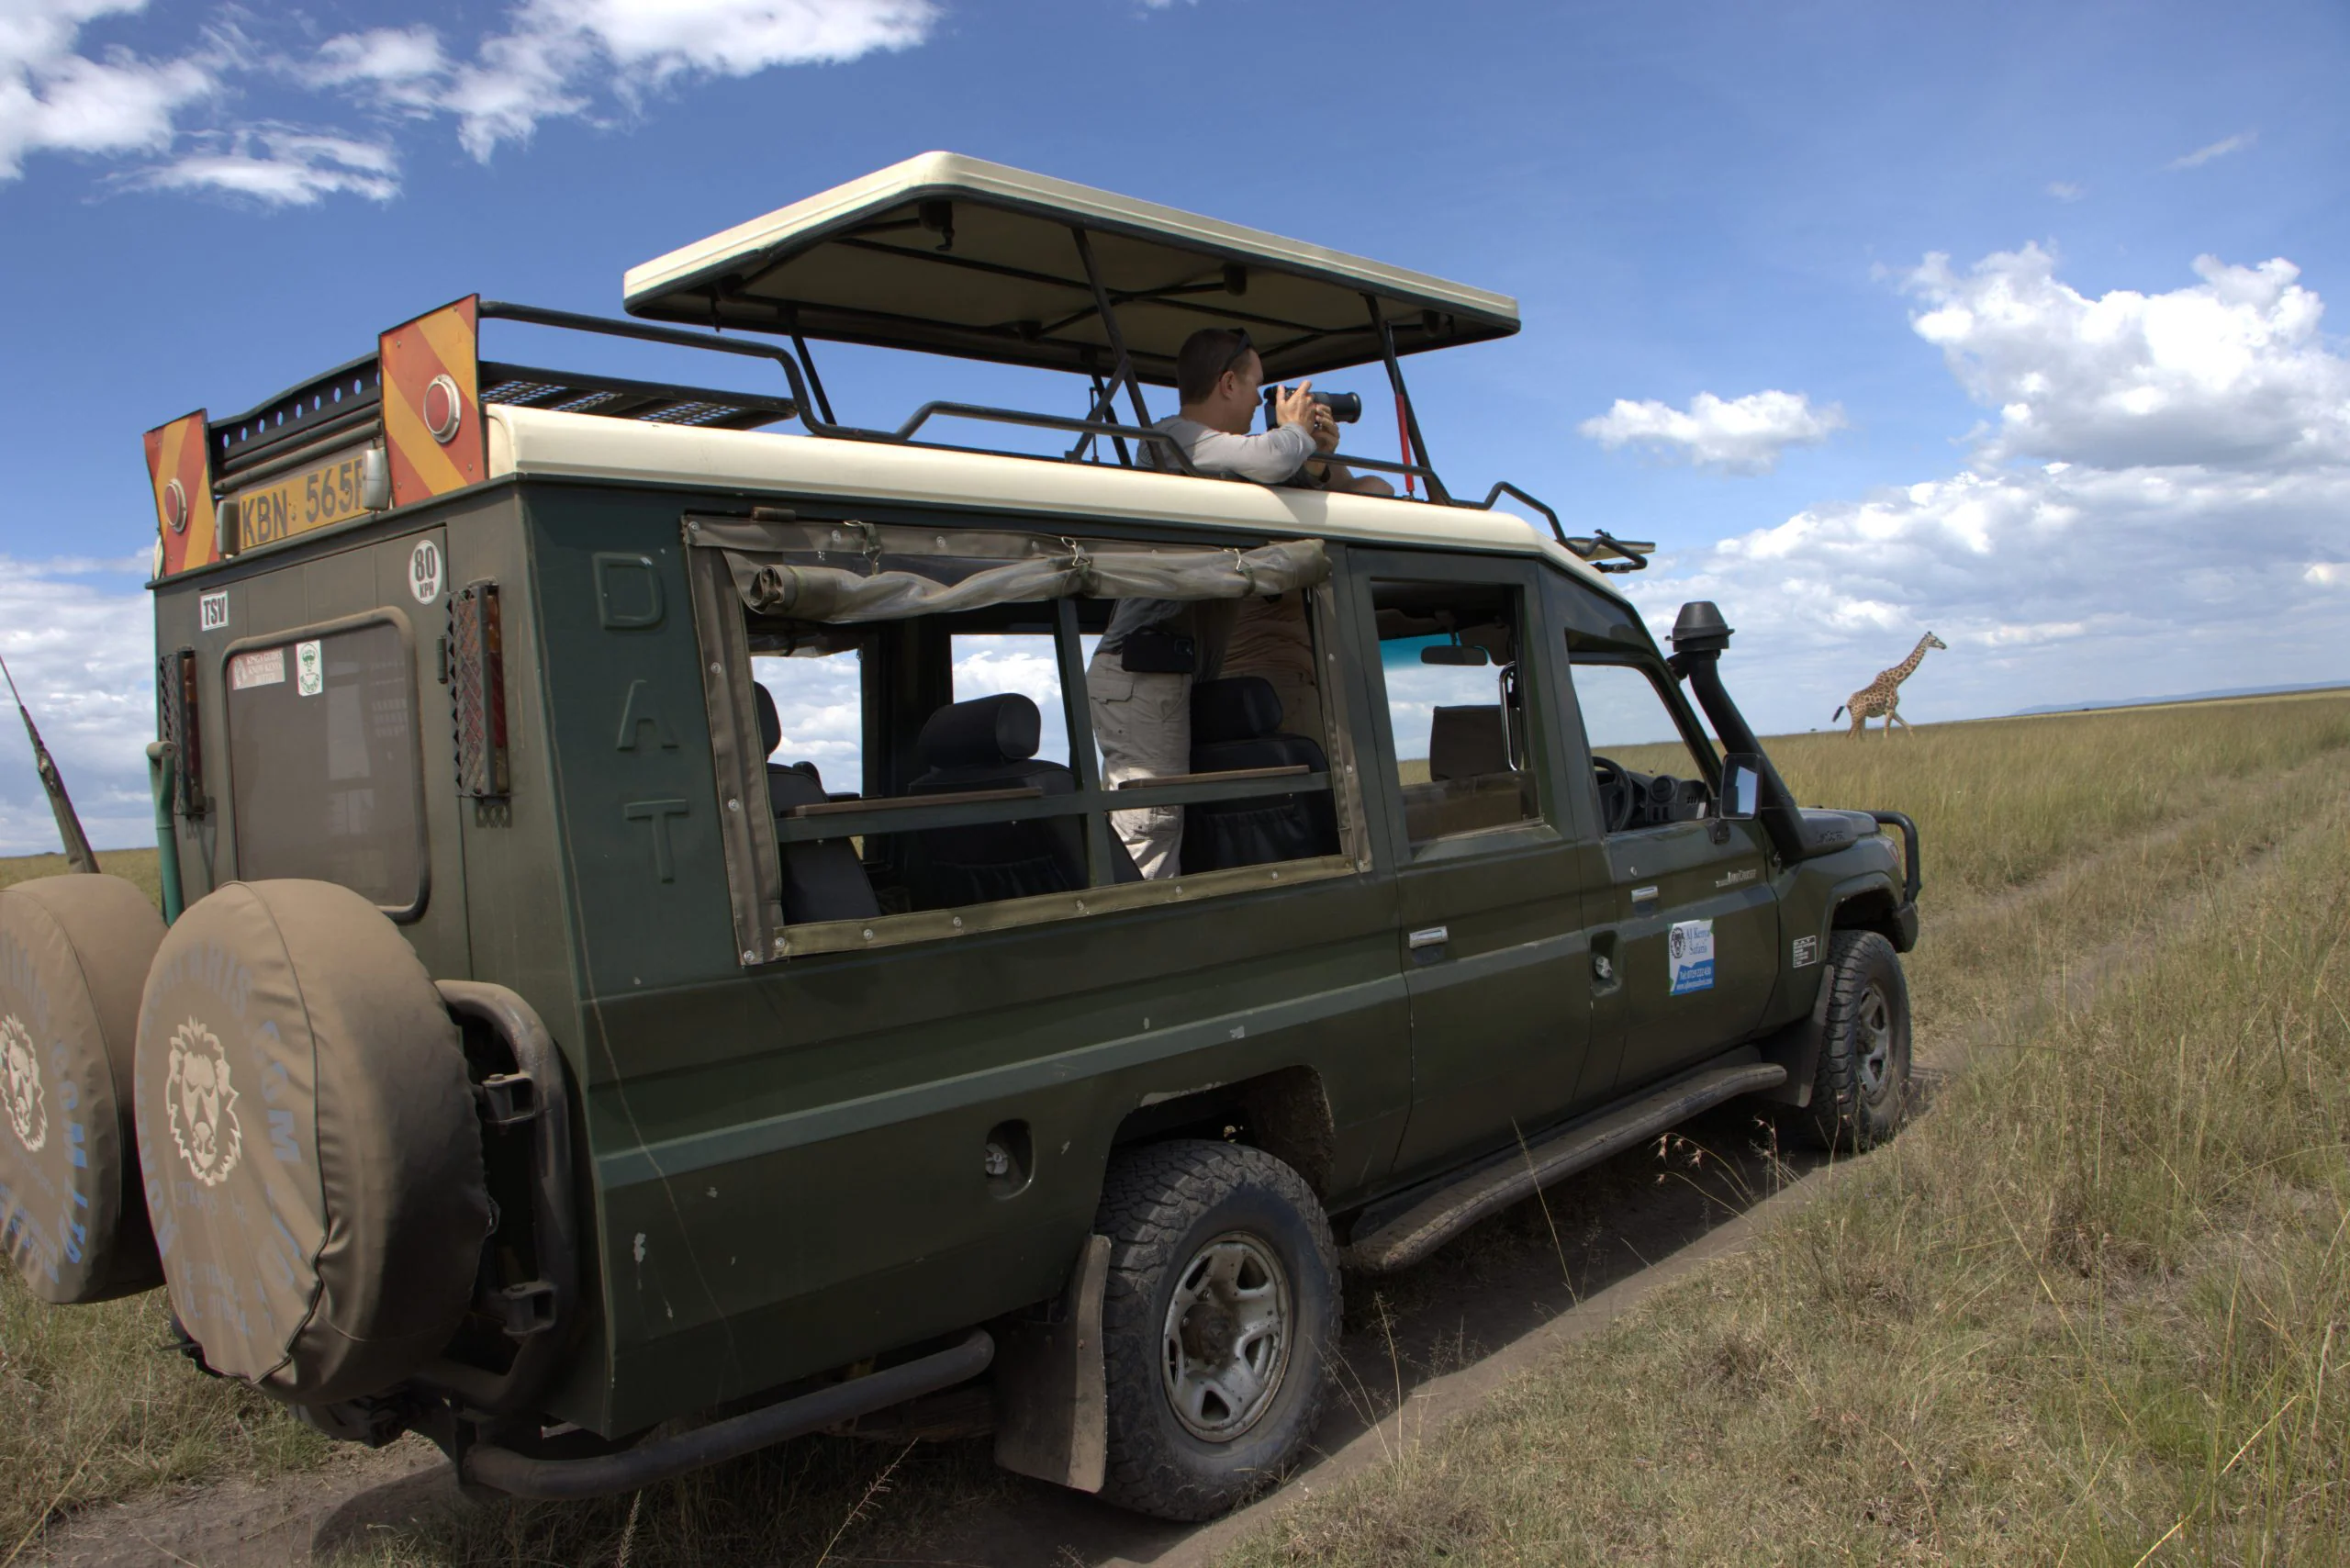 3-Day African Safari in Kenya